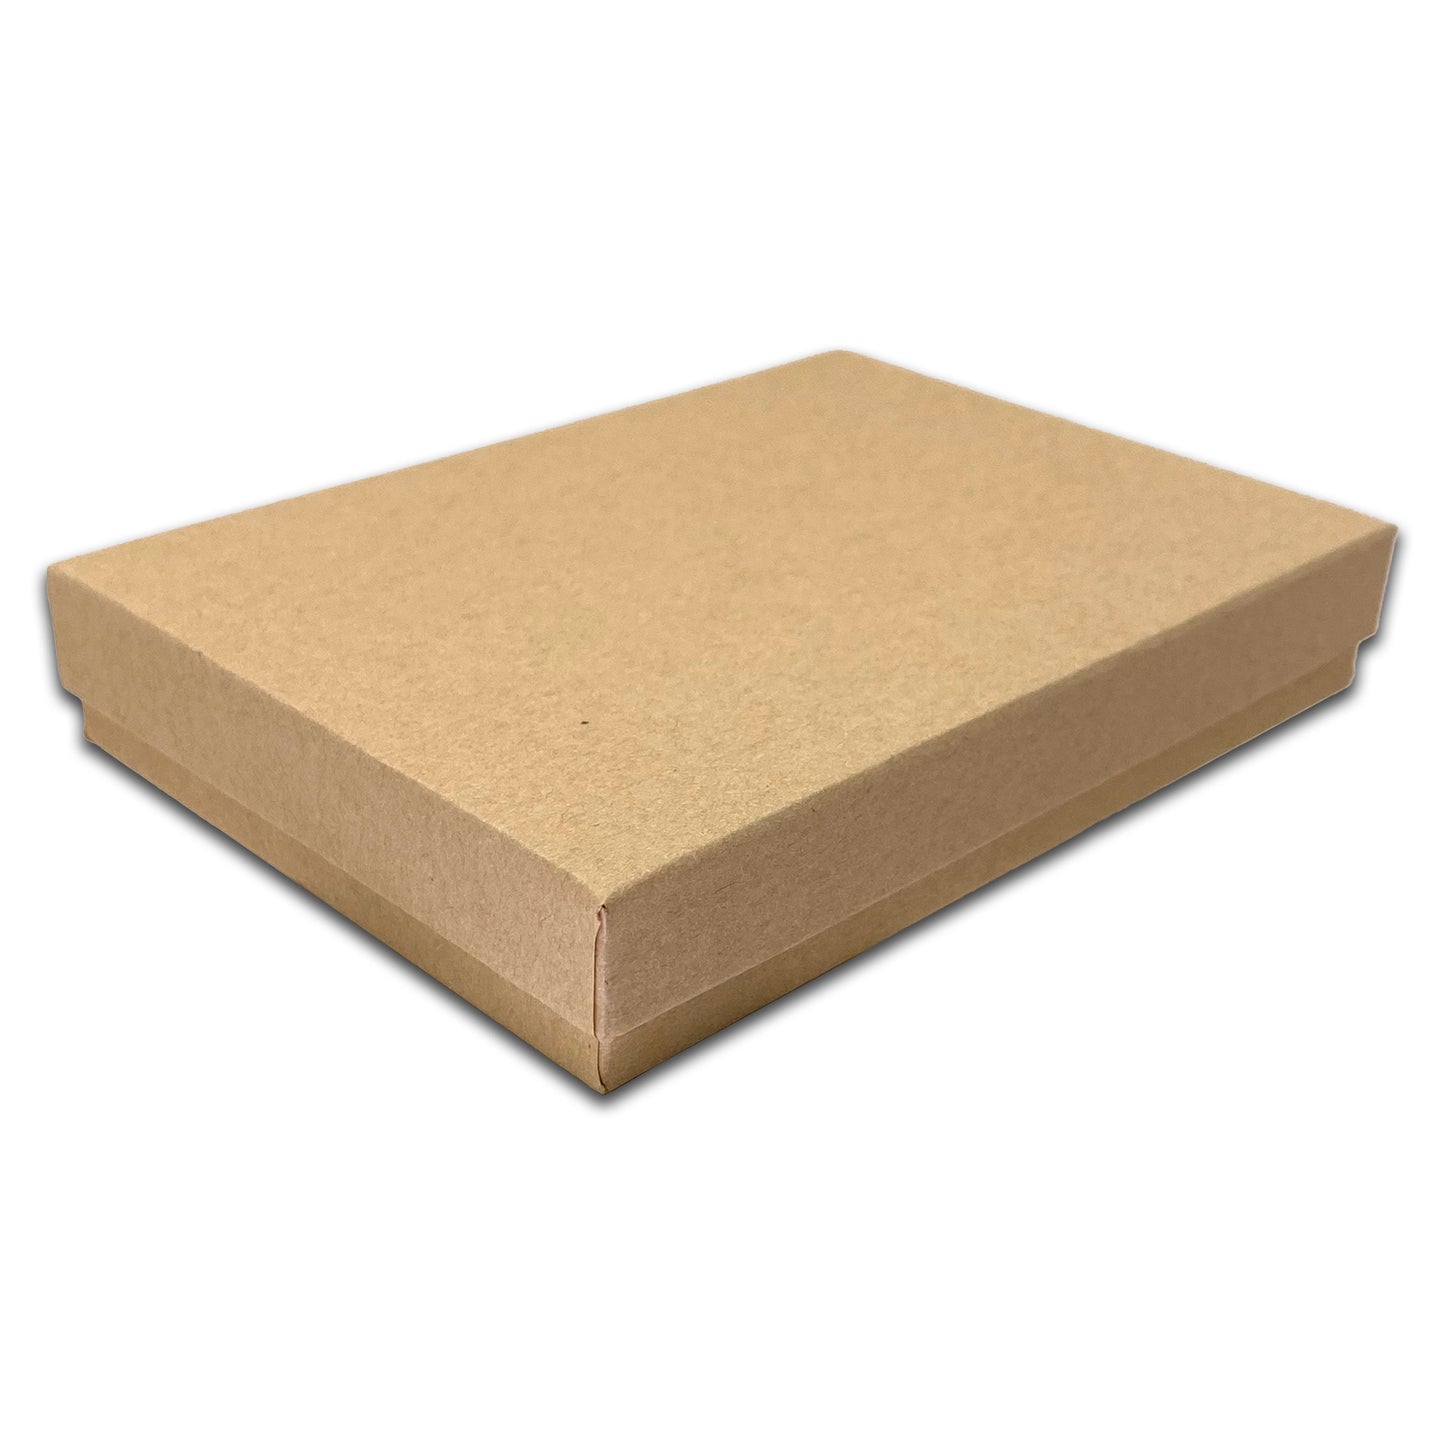 5 7/16" x 3 15/16" Kraft Combination Paper Box with Black Foam Insert